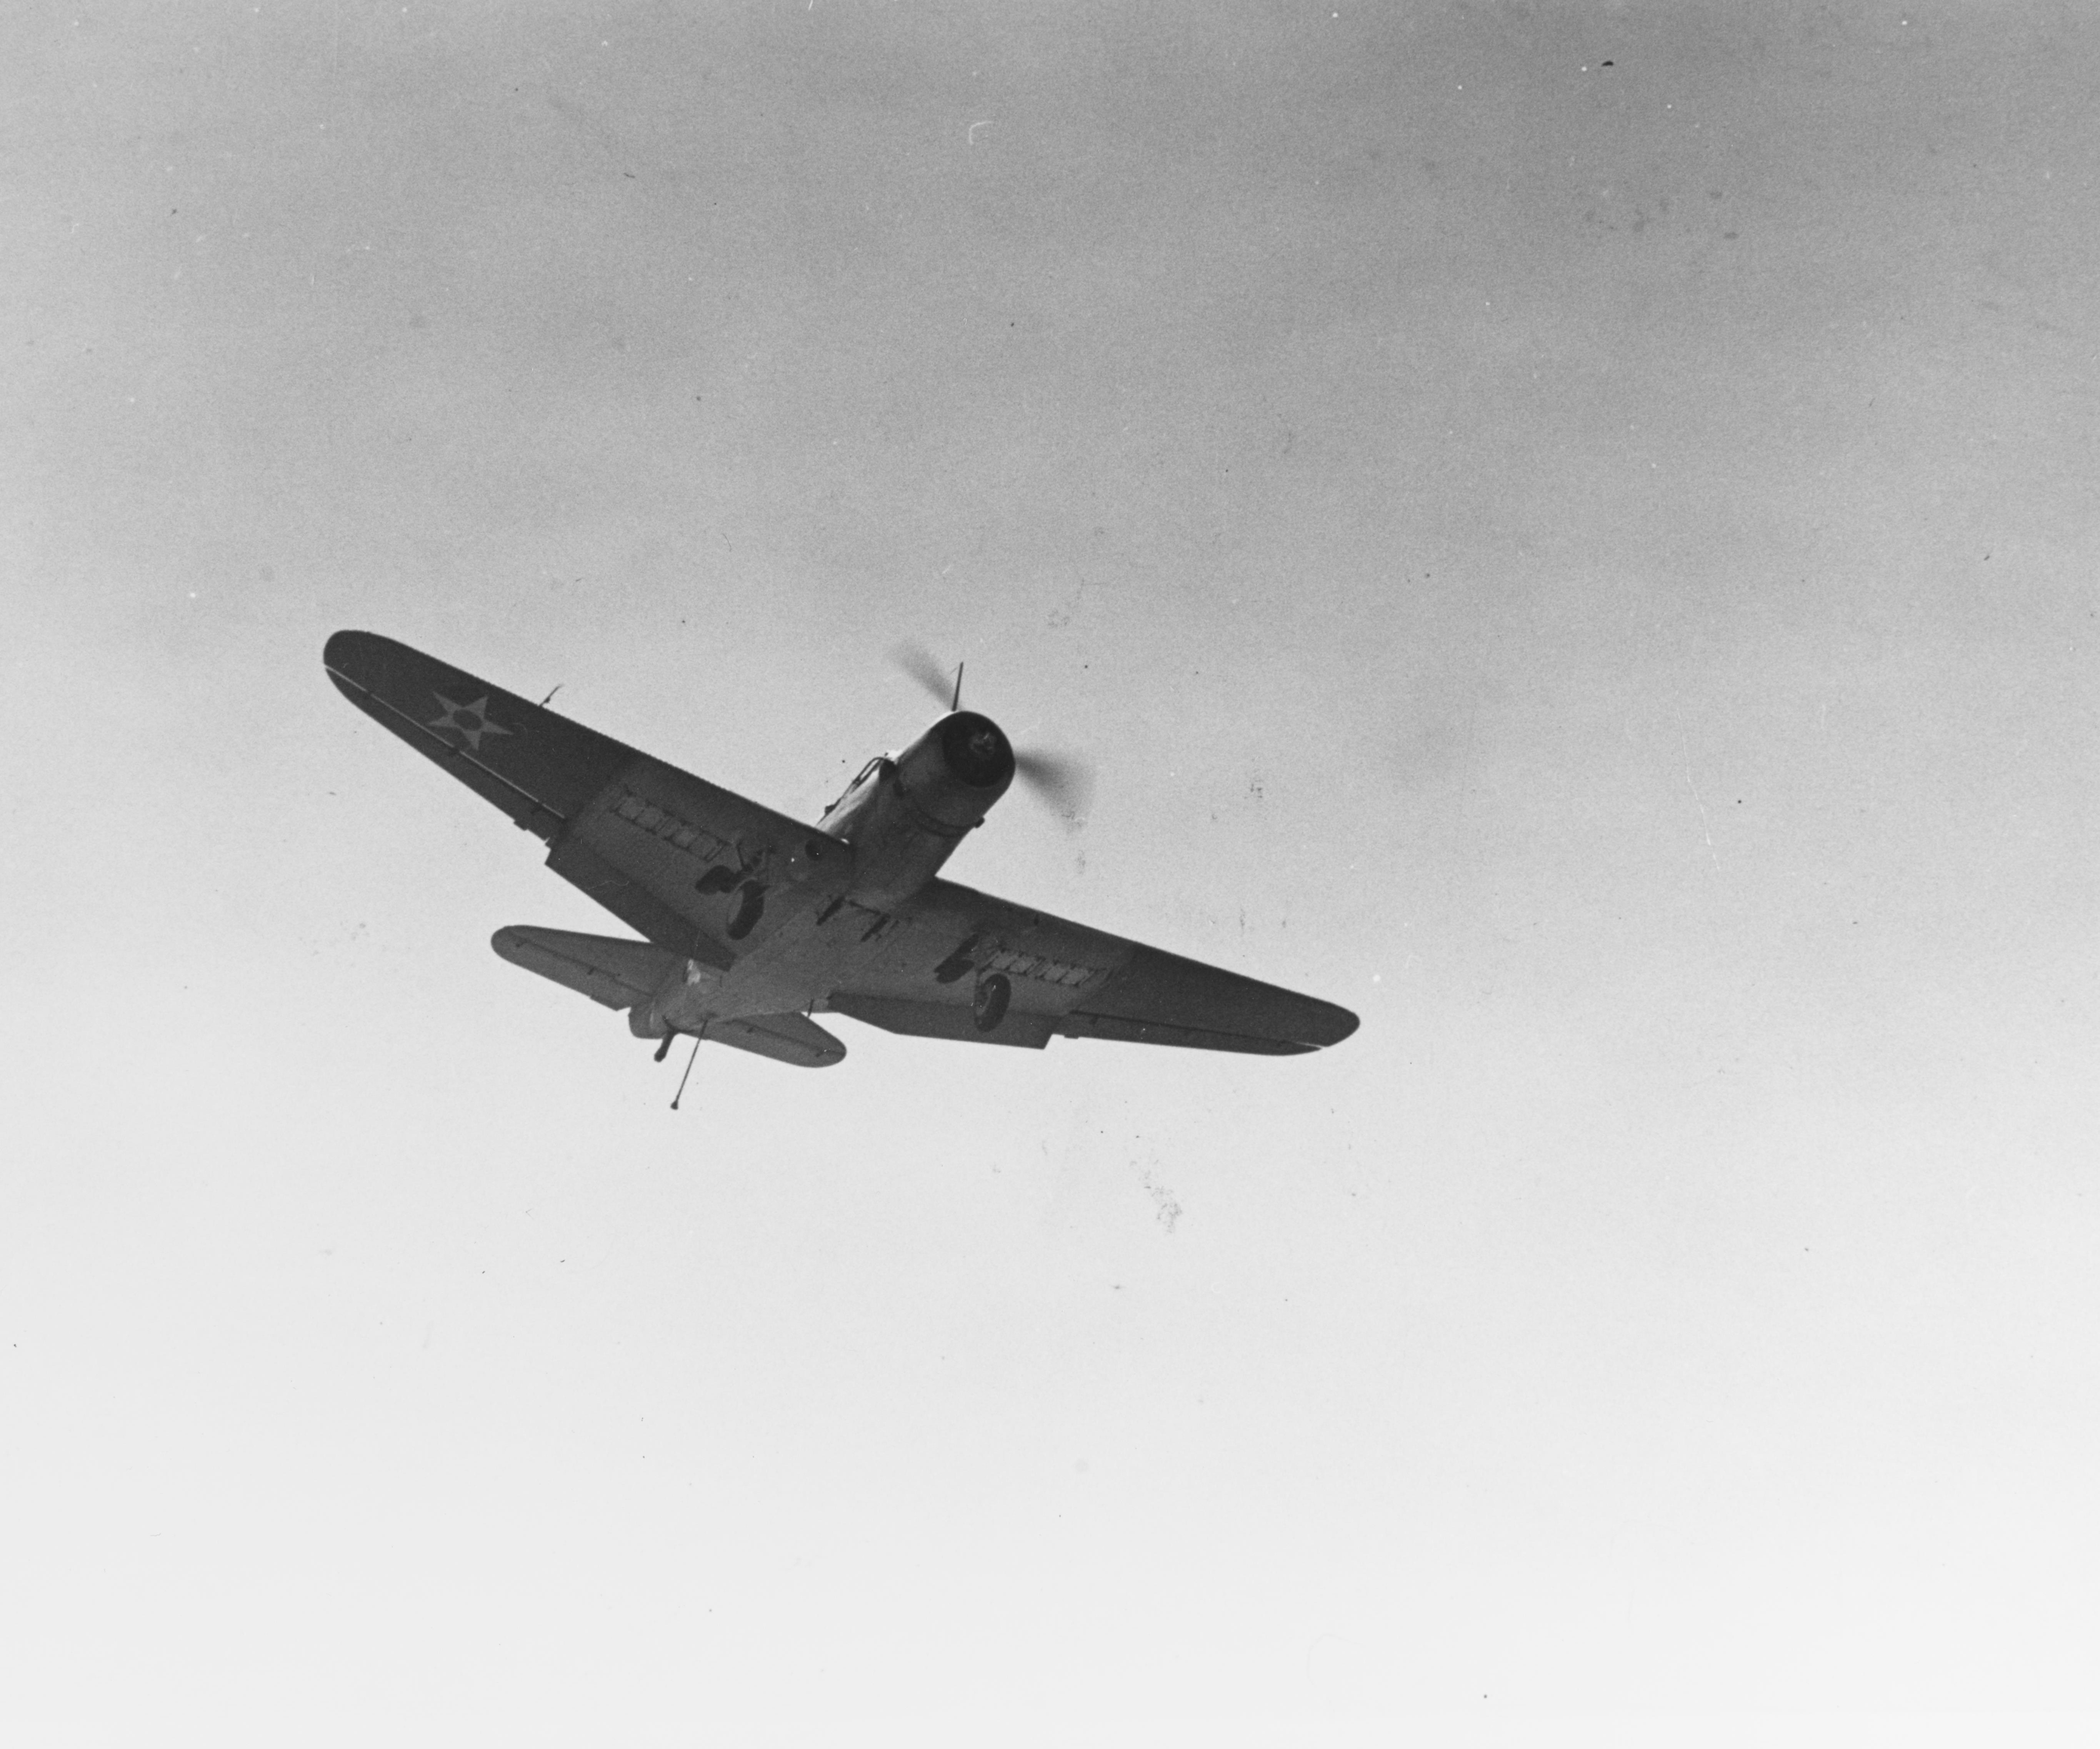 Douglas TBD-1 torpedo plane